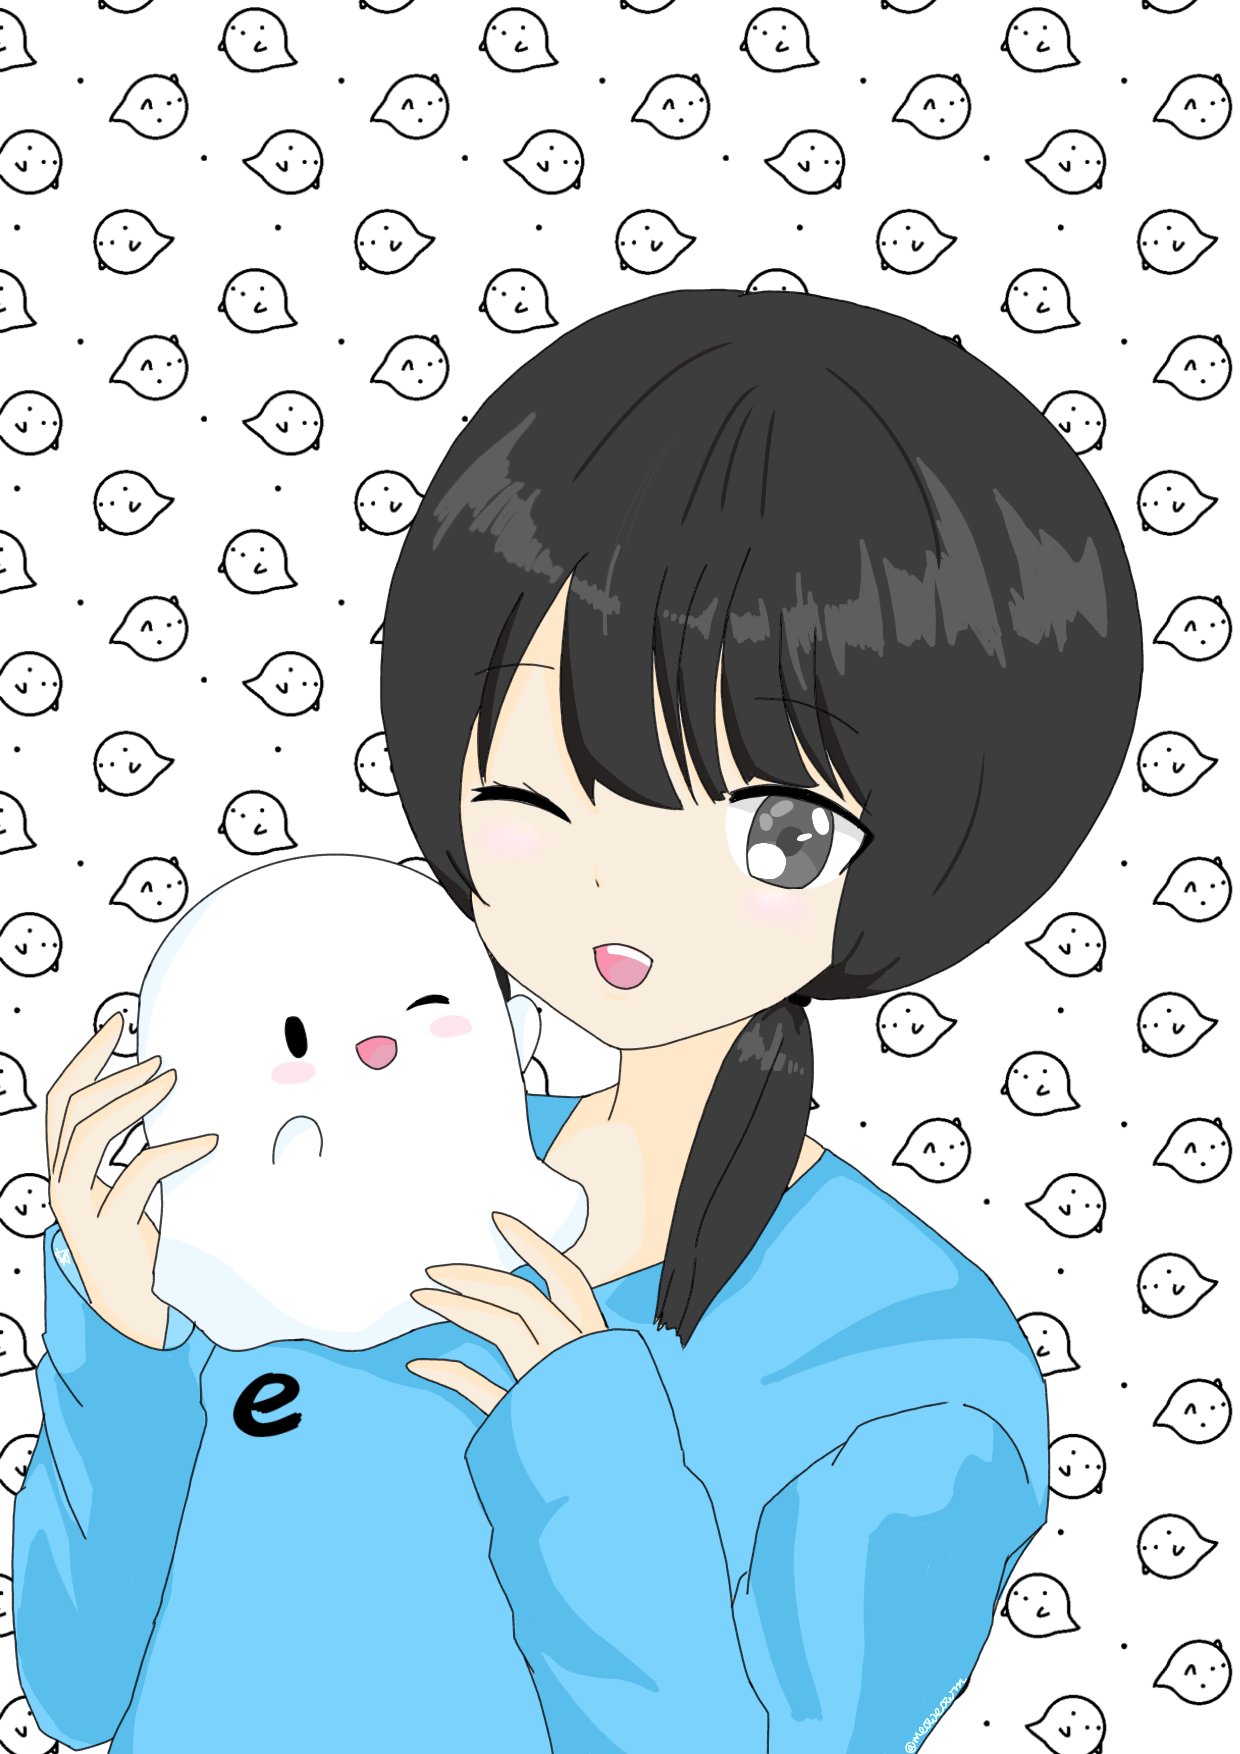 New profile pic 😺😺 #anime #animegirl #fanart #cute #art #artis #animeart  #cuteart #cuteanime #animeartist #digitalart…